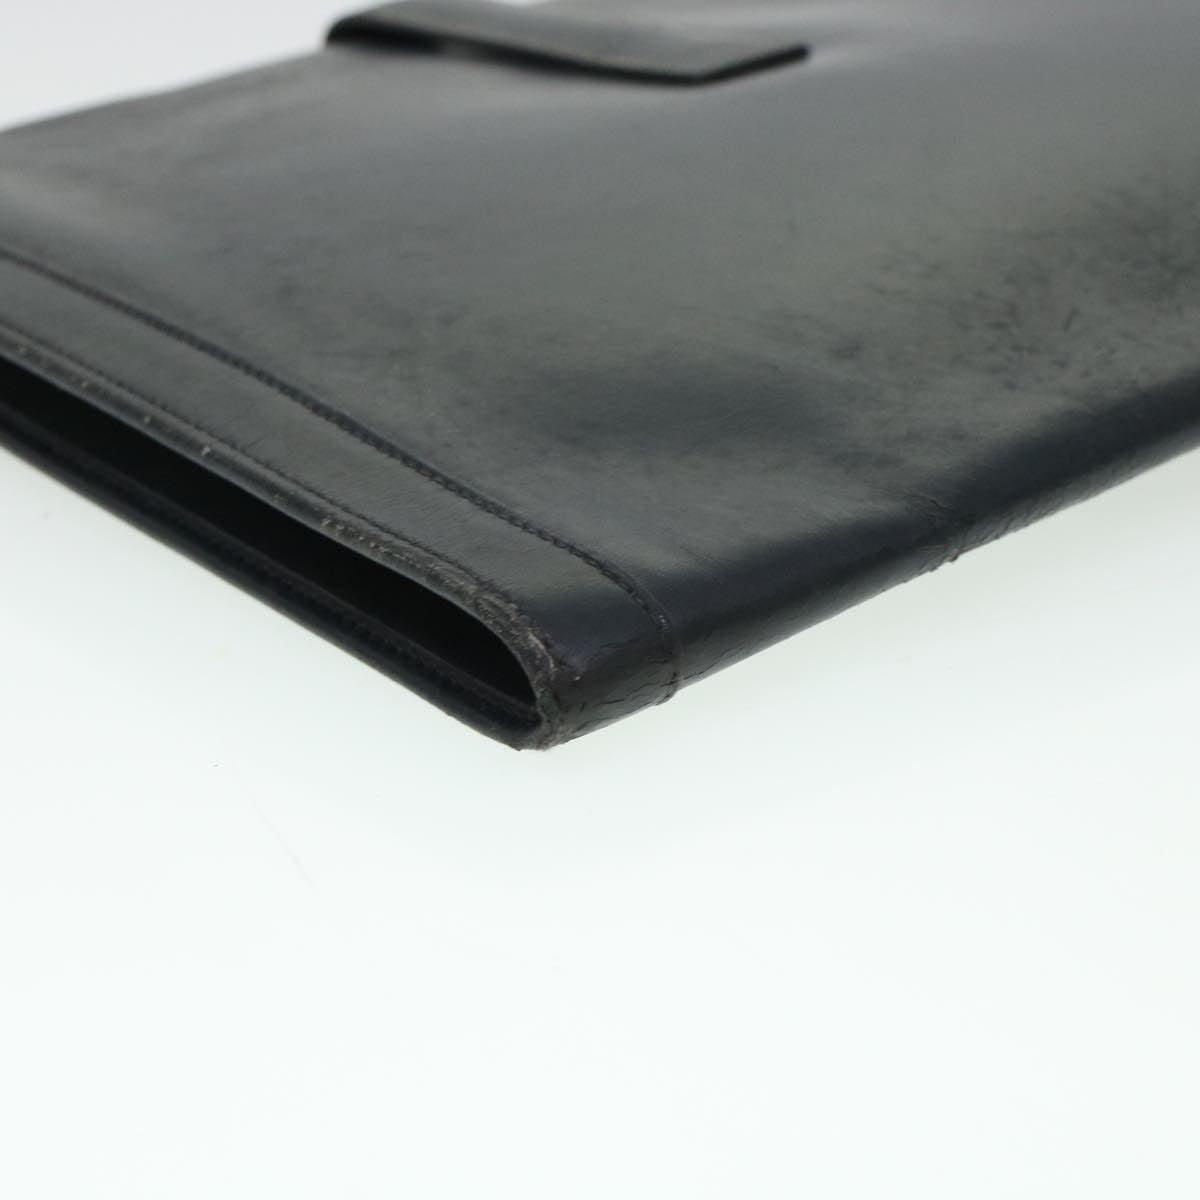 HERMES Giger GM Clutch Bag Leather Black Auth bs5943